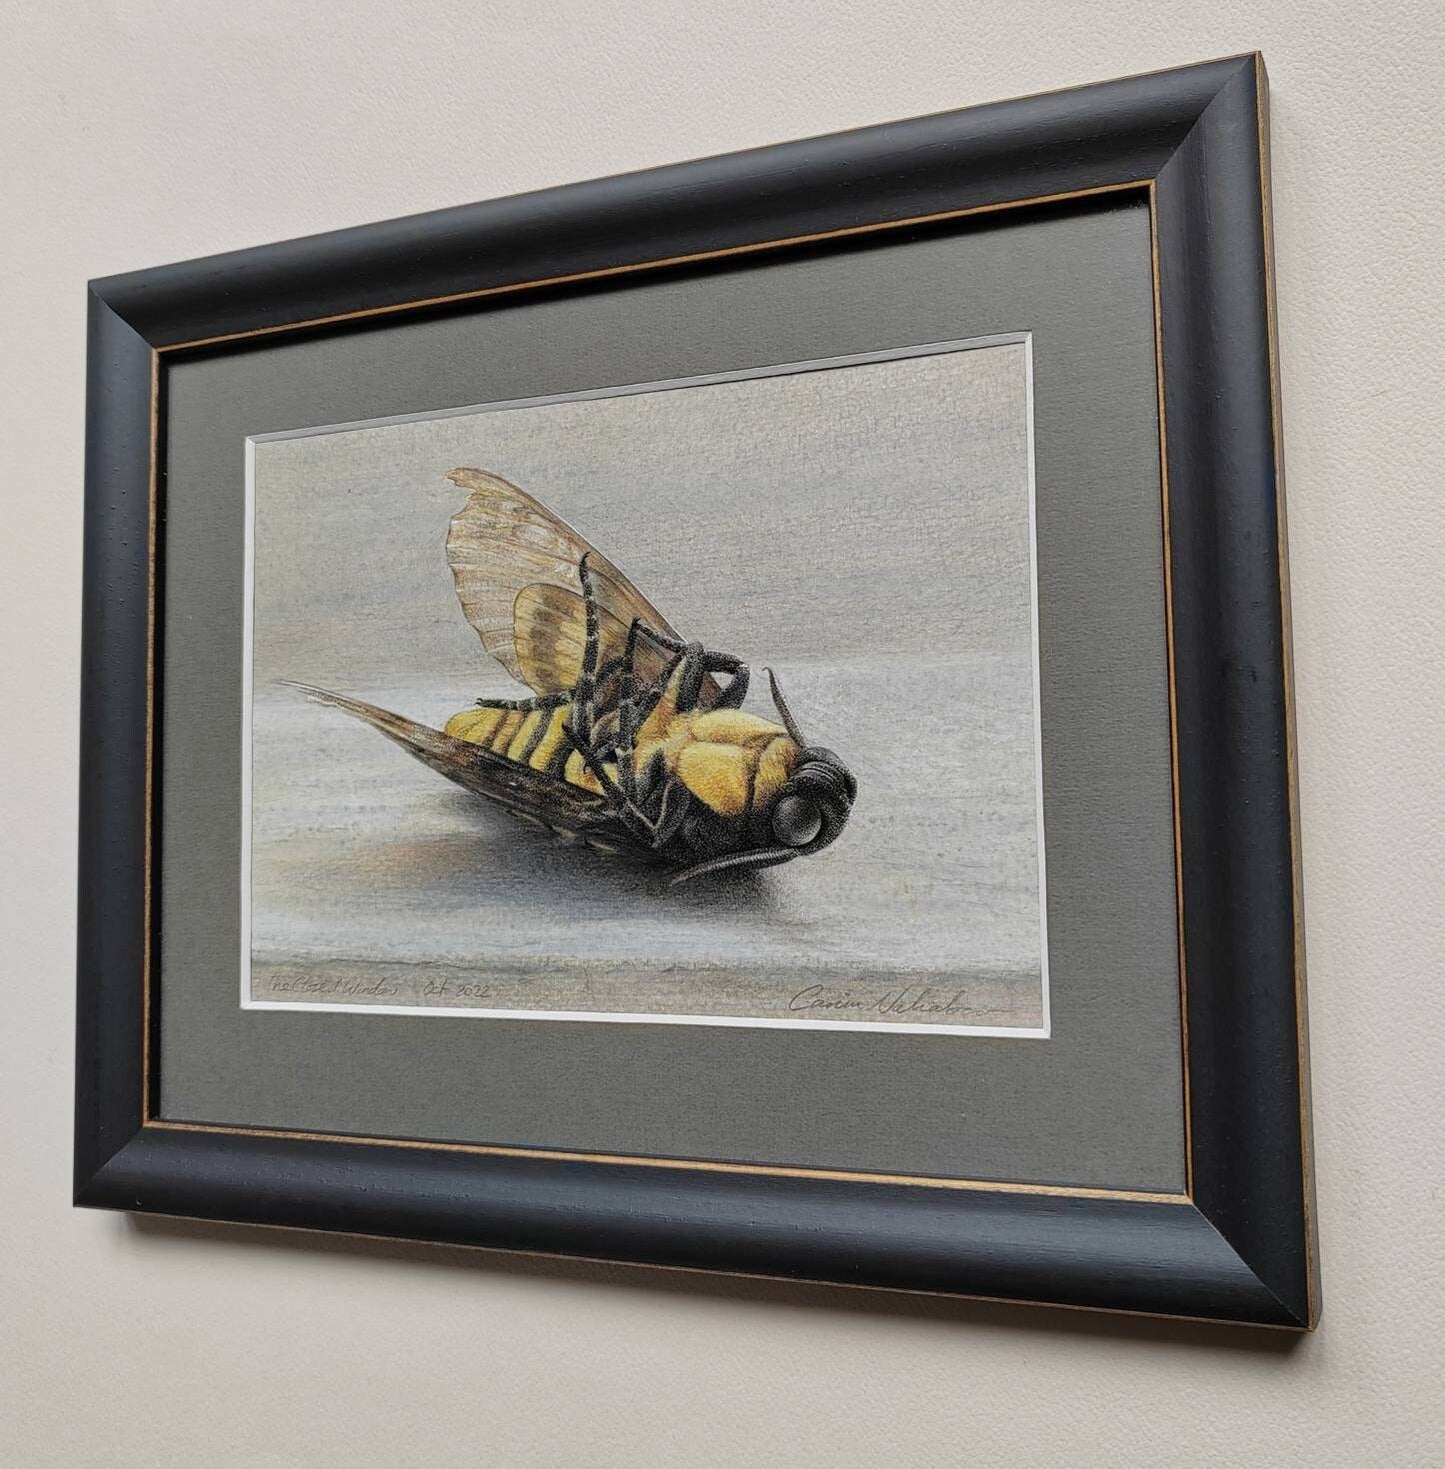 Framed Original Artwork - The Closed Window. Acherontia atropos, Death's Head Hawk Moth